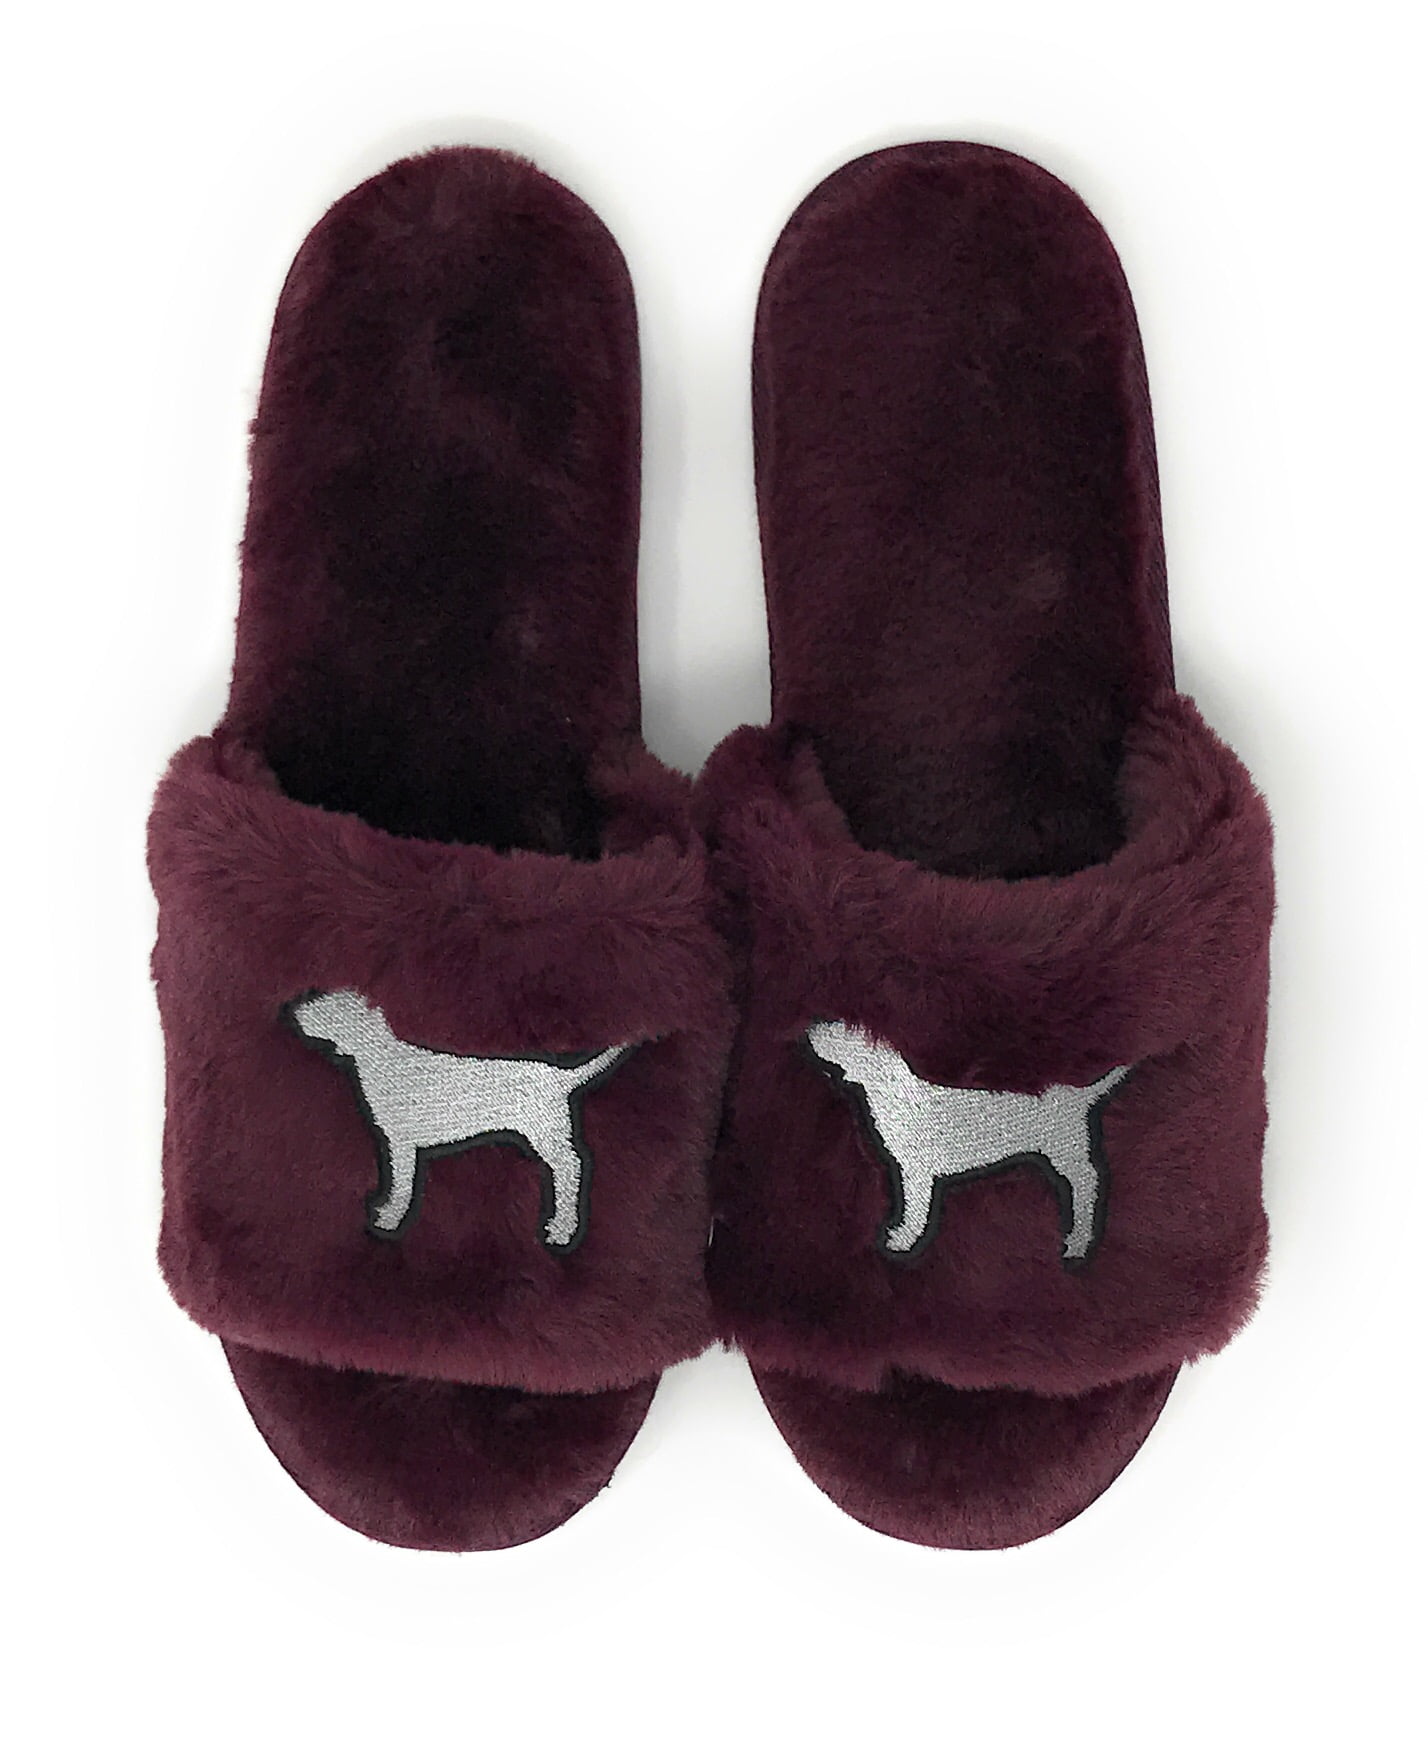 victoria secret pink fuzzy slippers